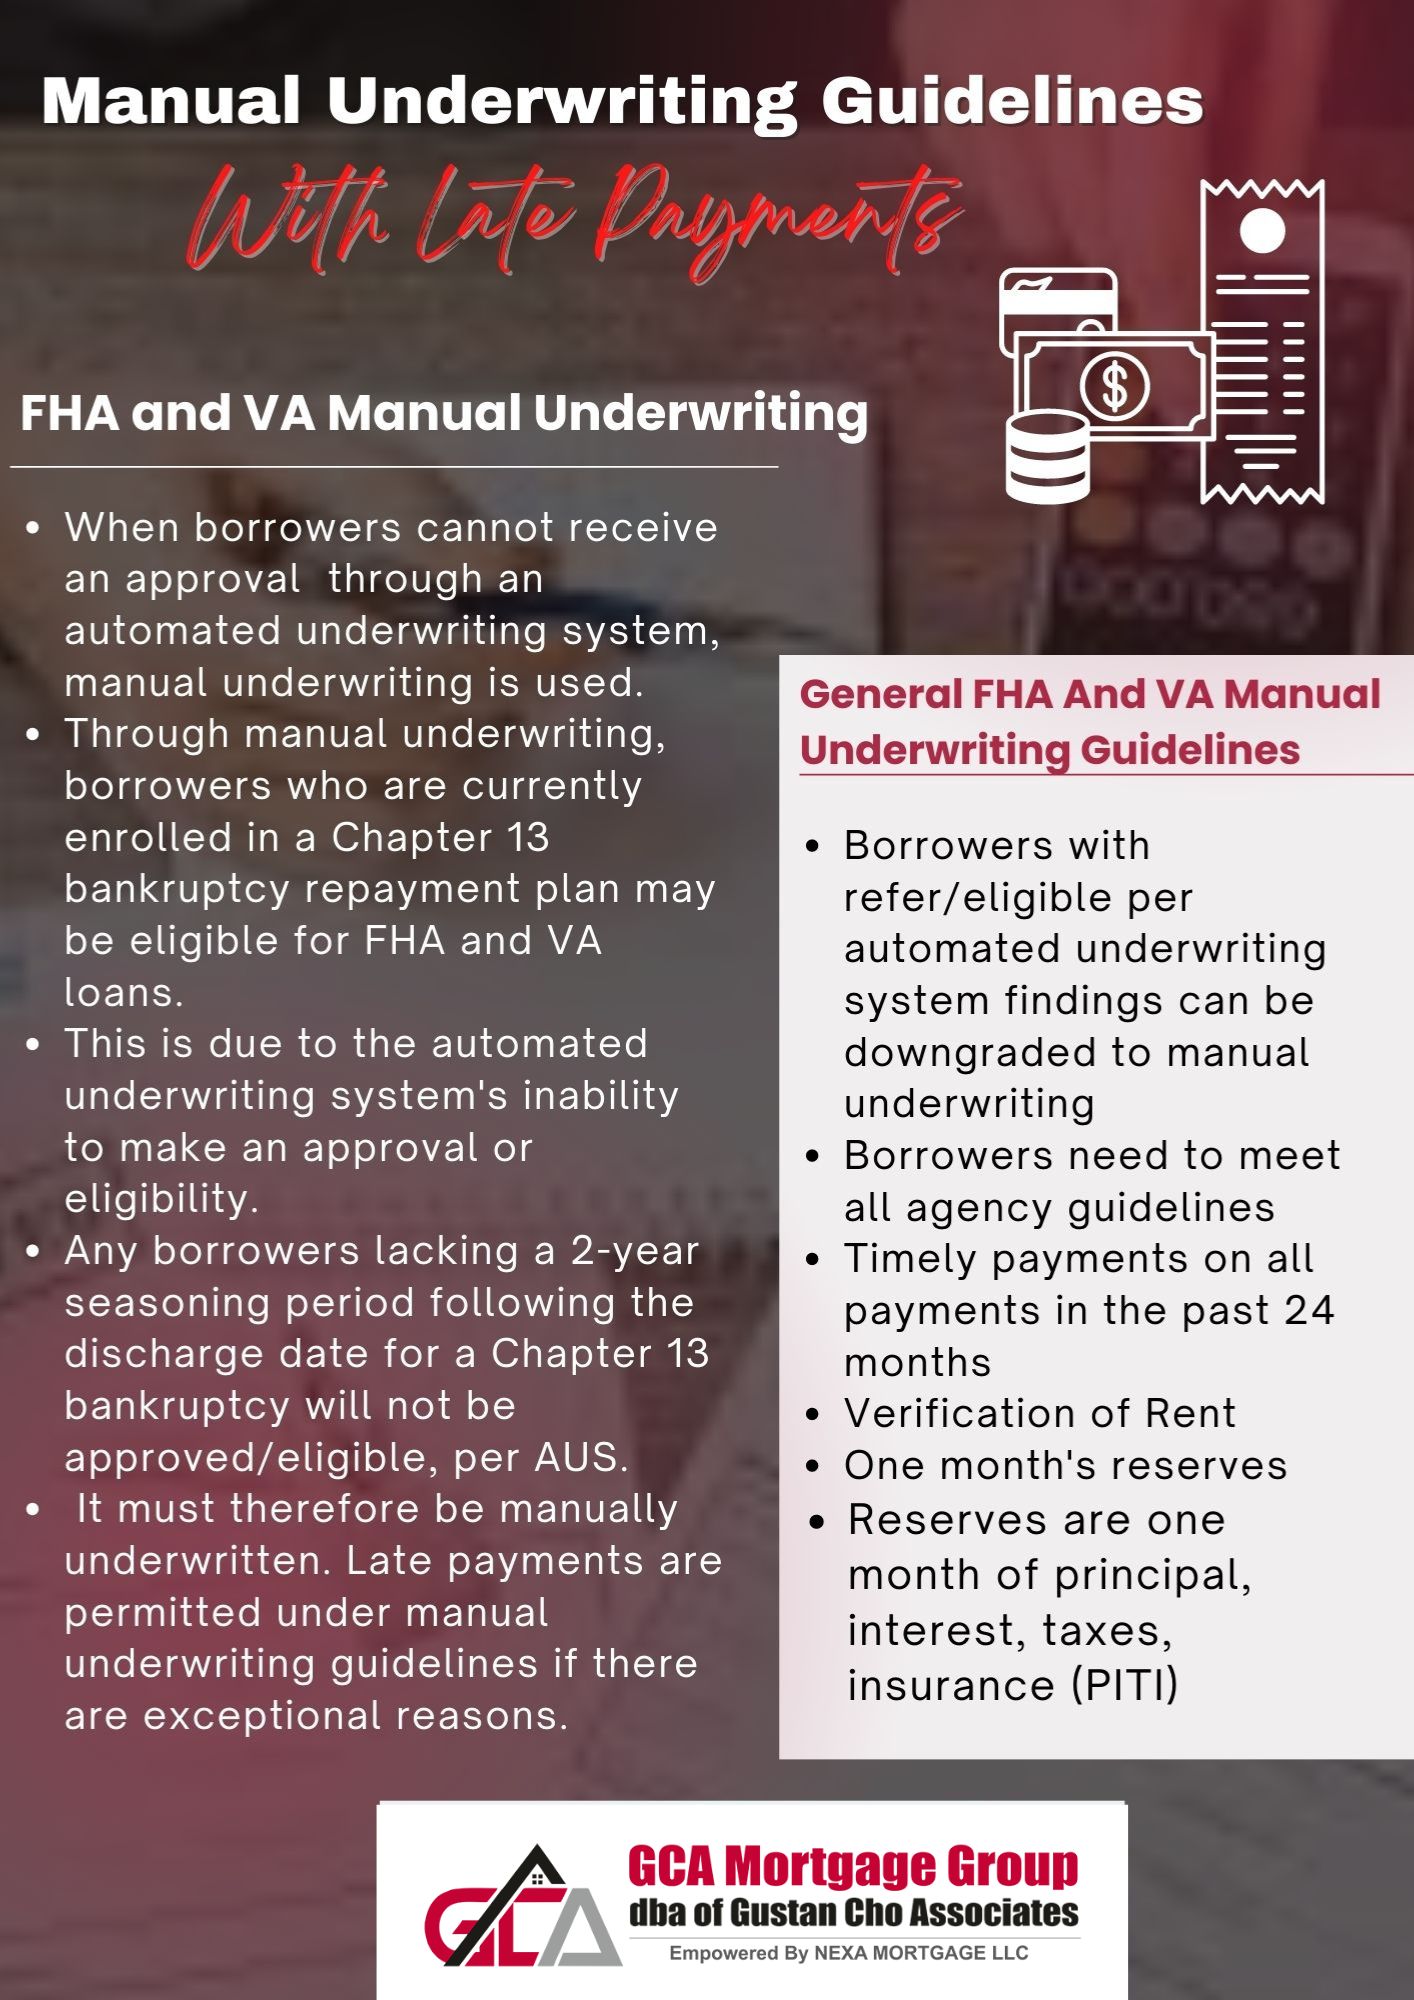 General FHA And VA Manual Underwriting Guidelines